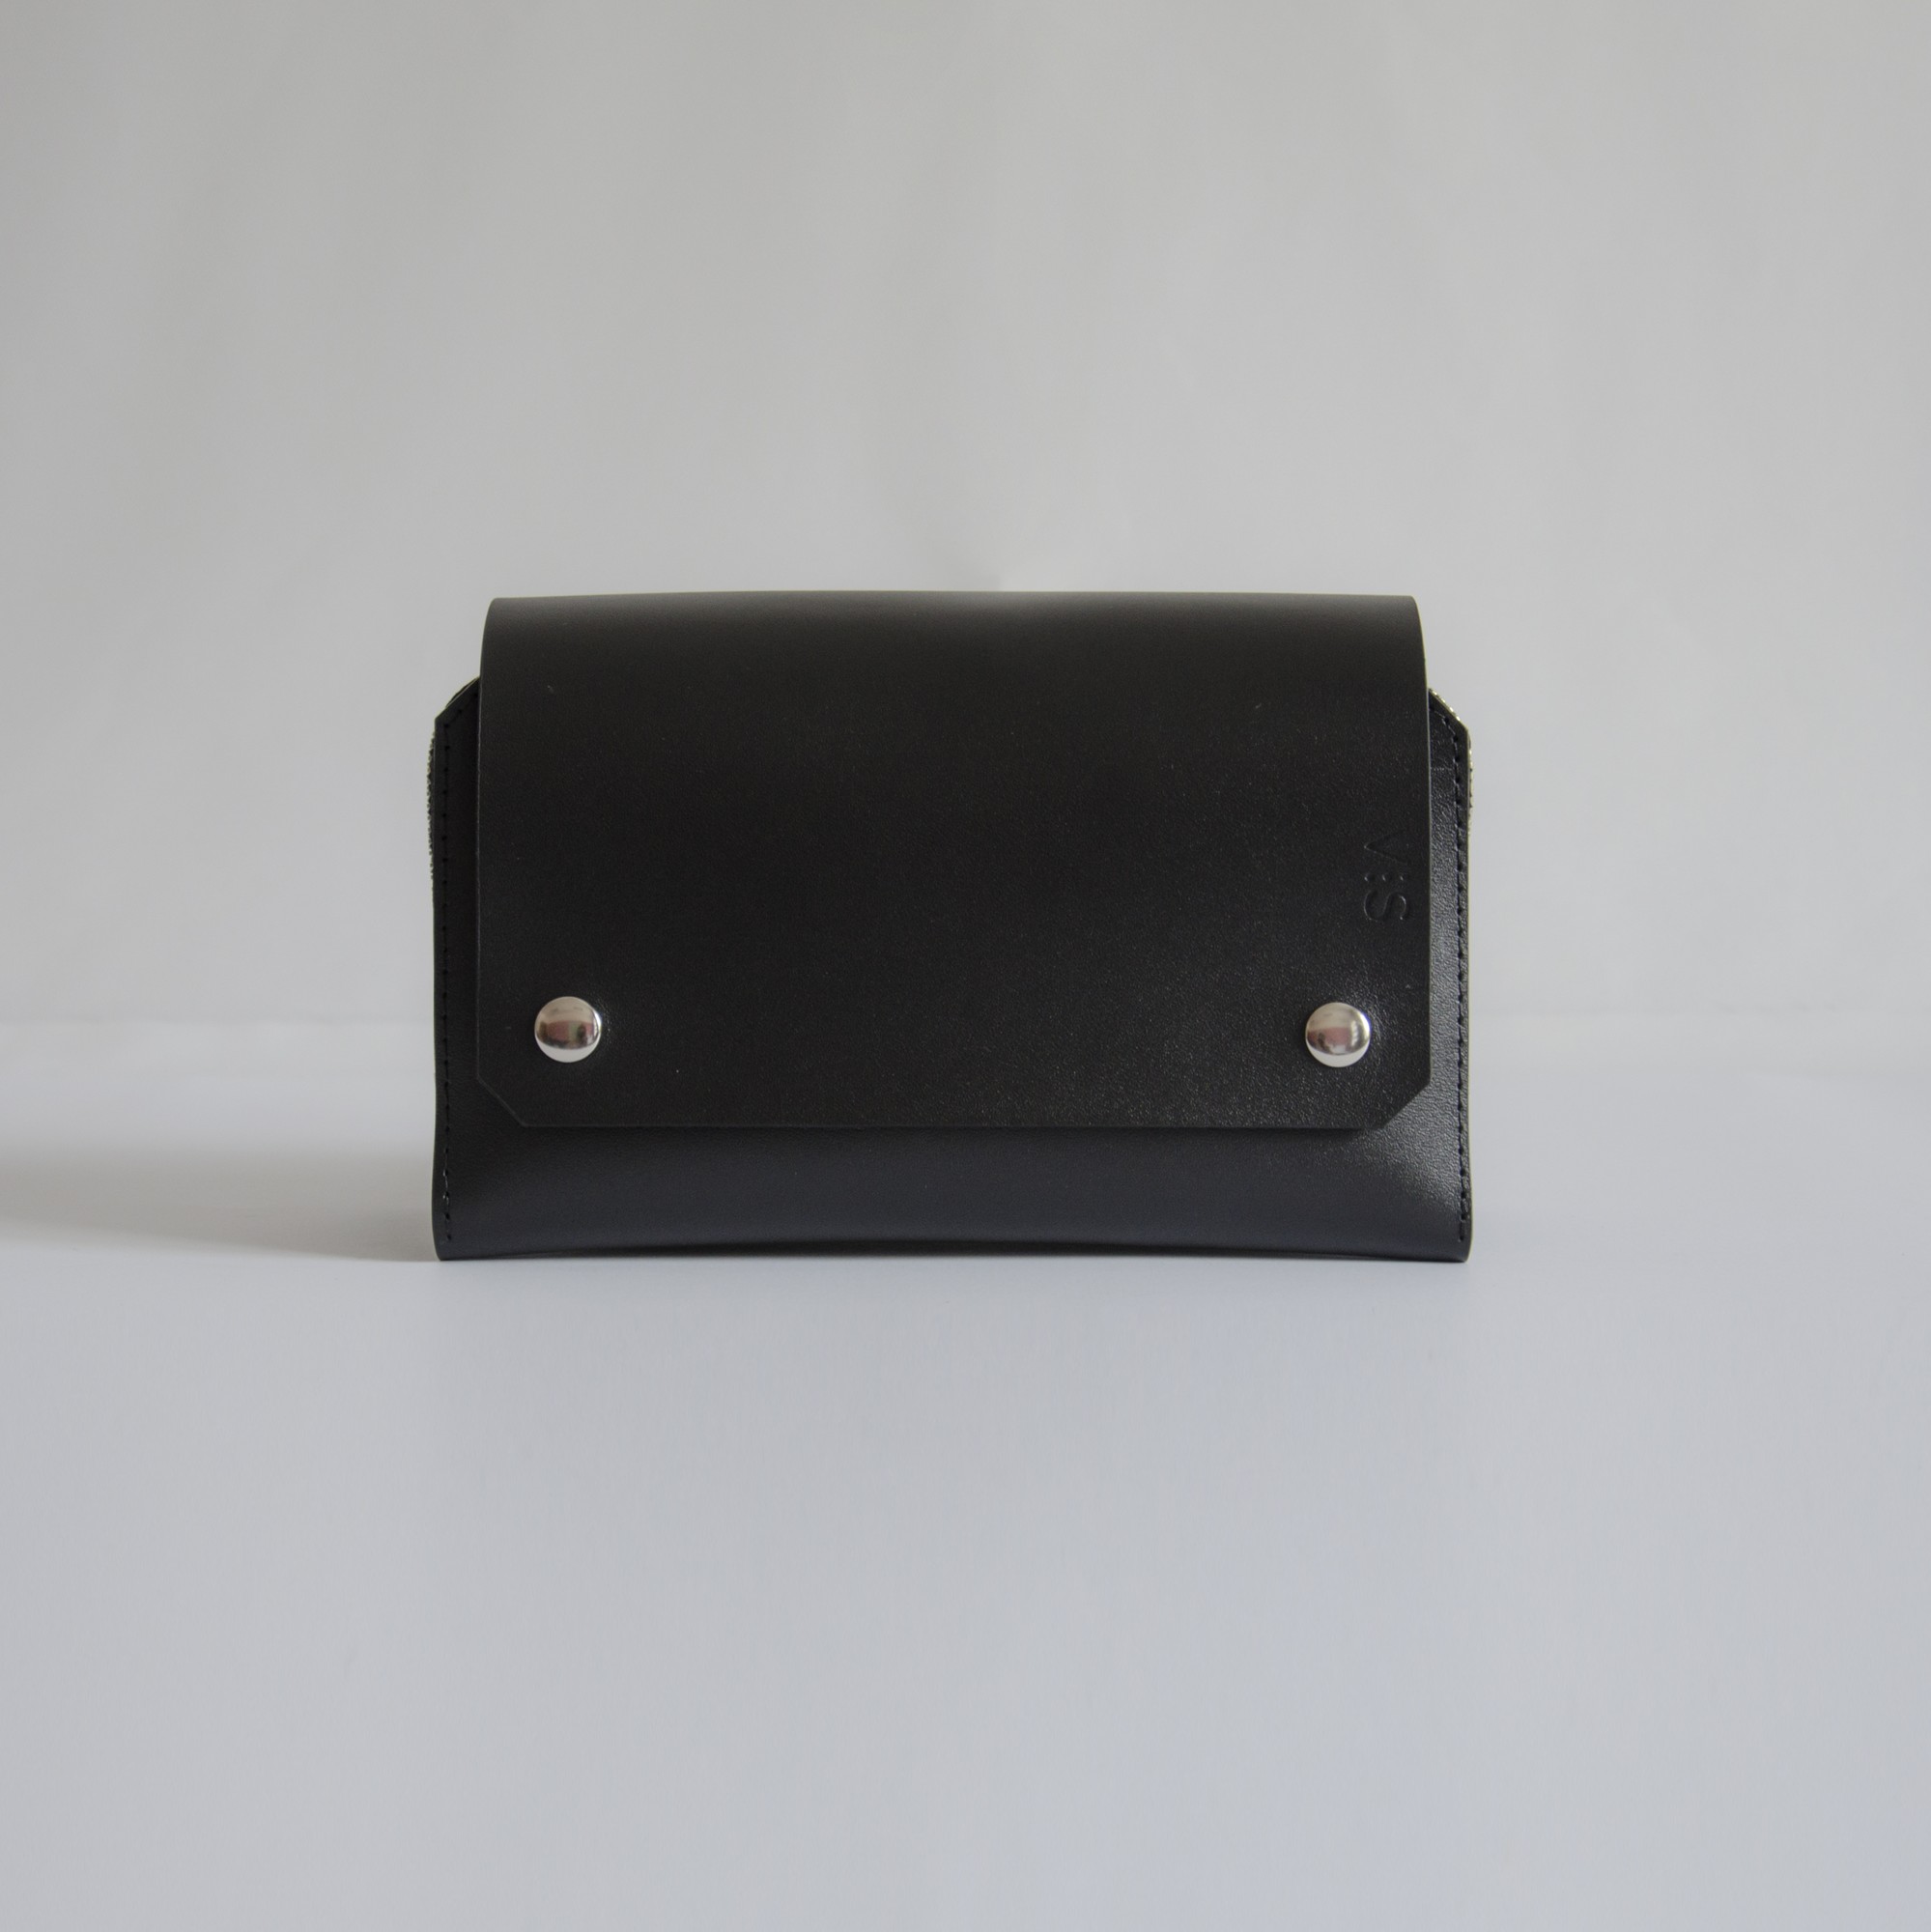 Navi leather bag in black color